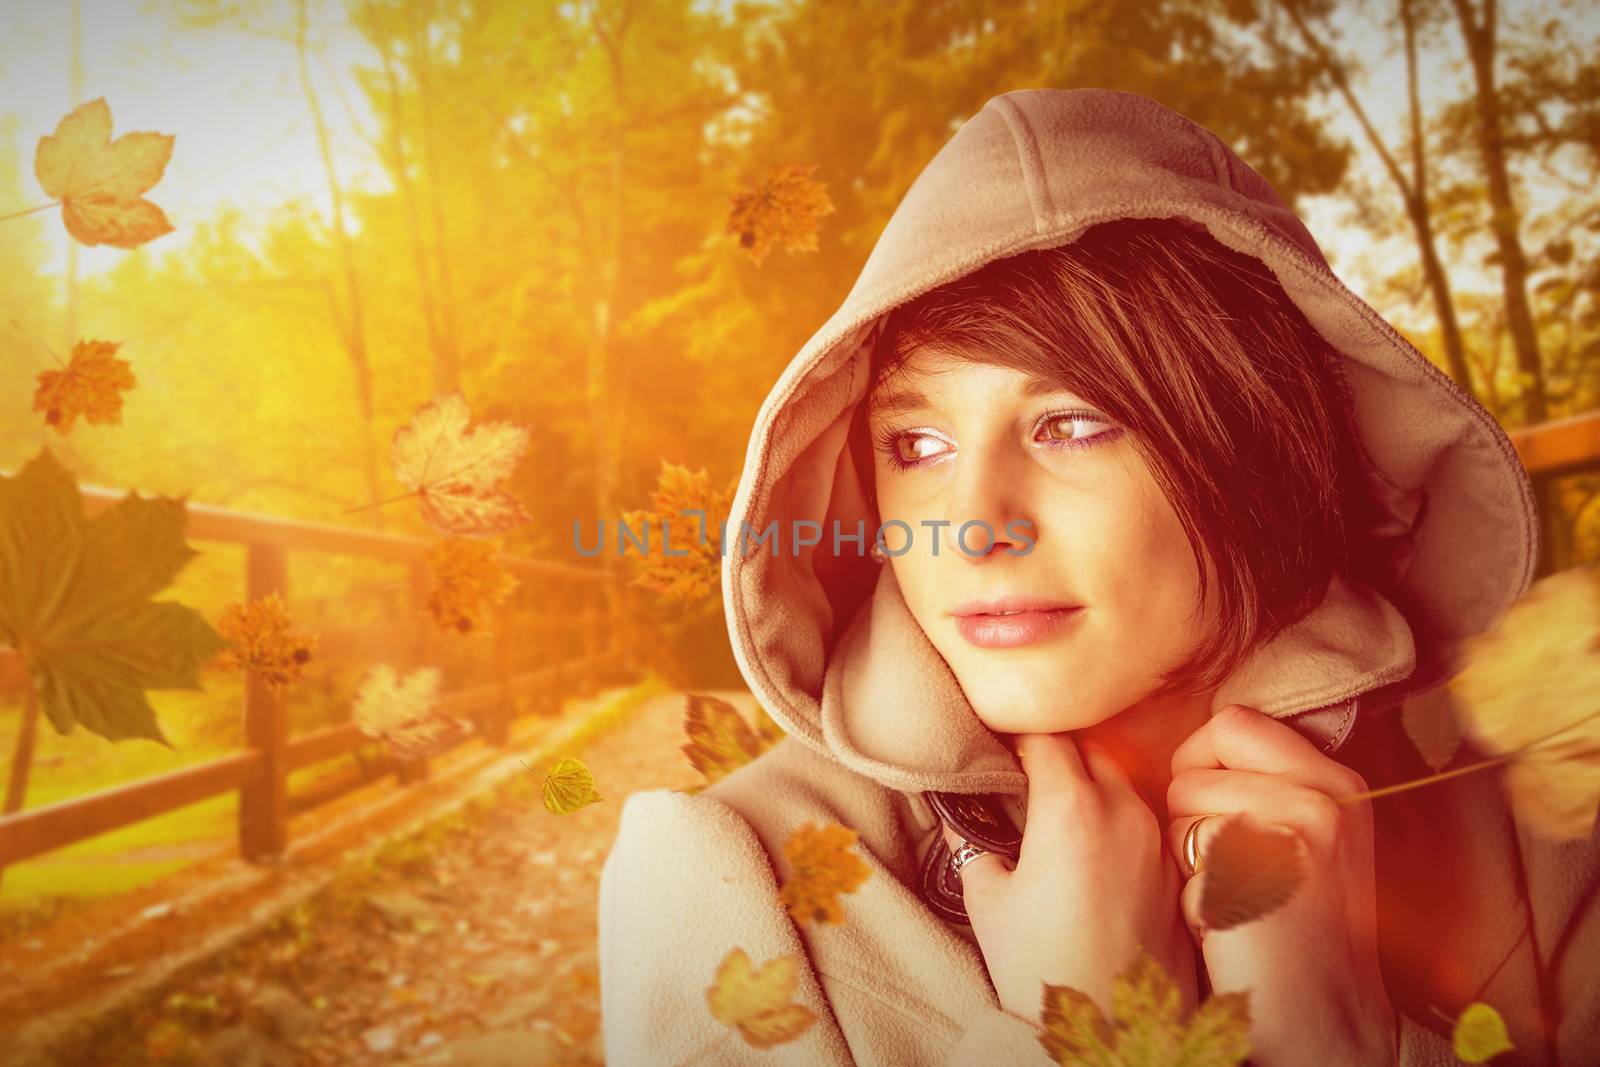 Beautiful woman wearing winter coat looking away against autumn scene